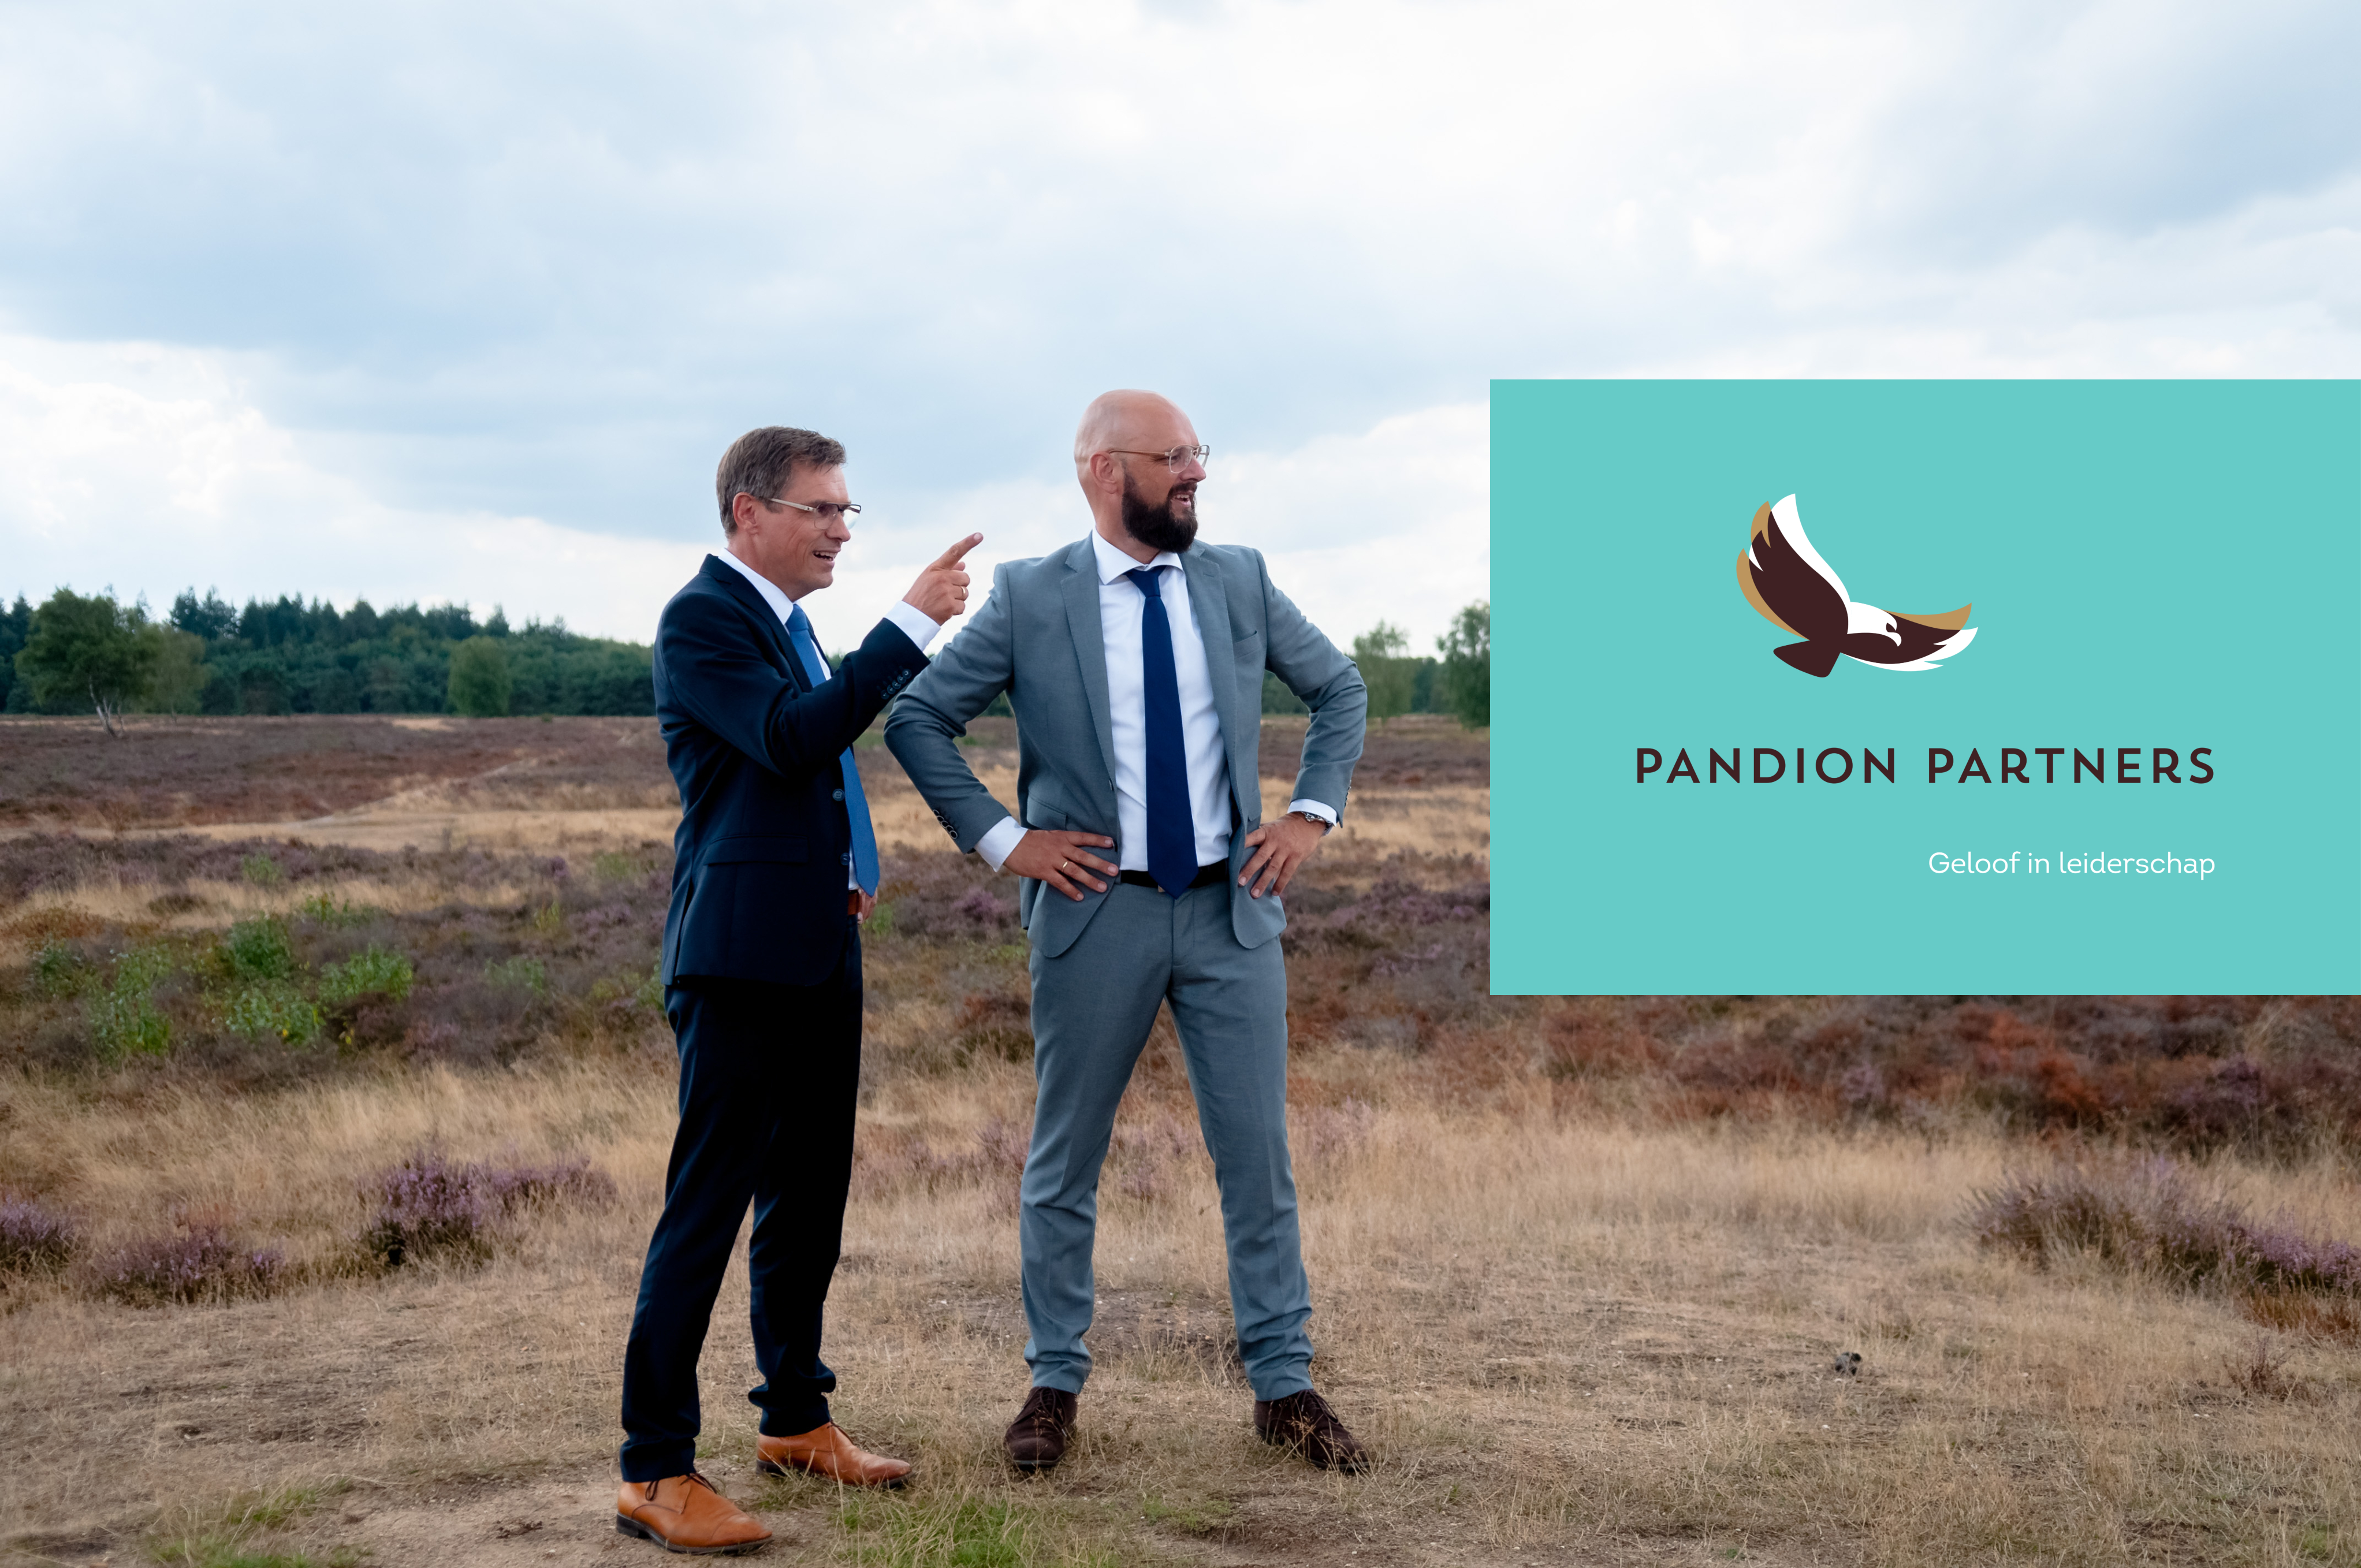 Pandion Partners